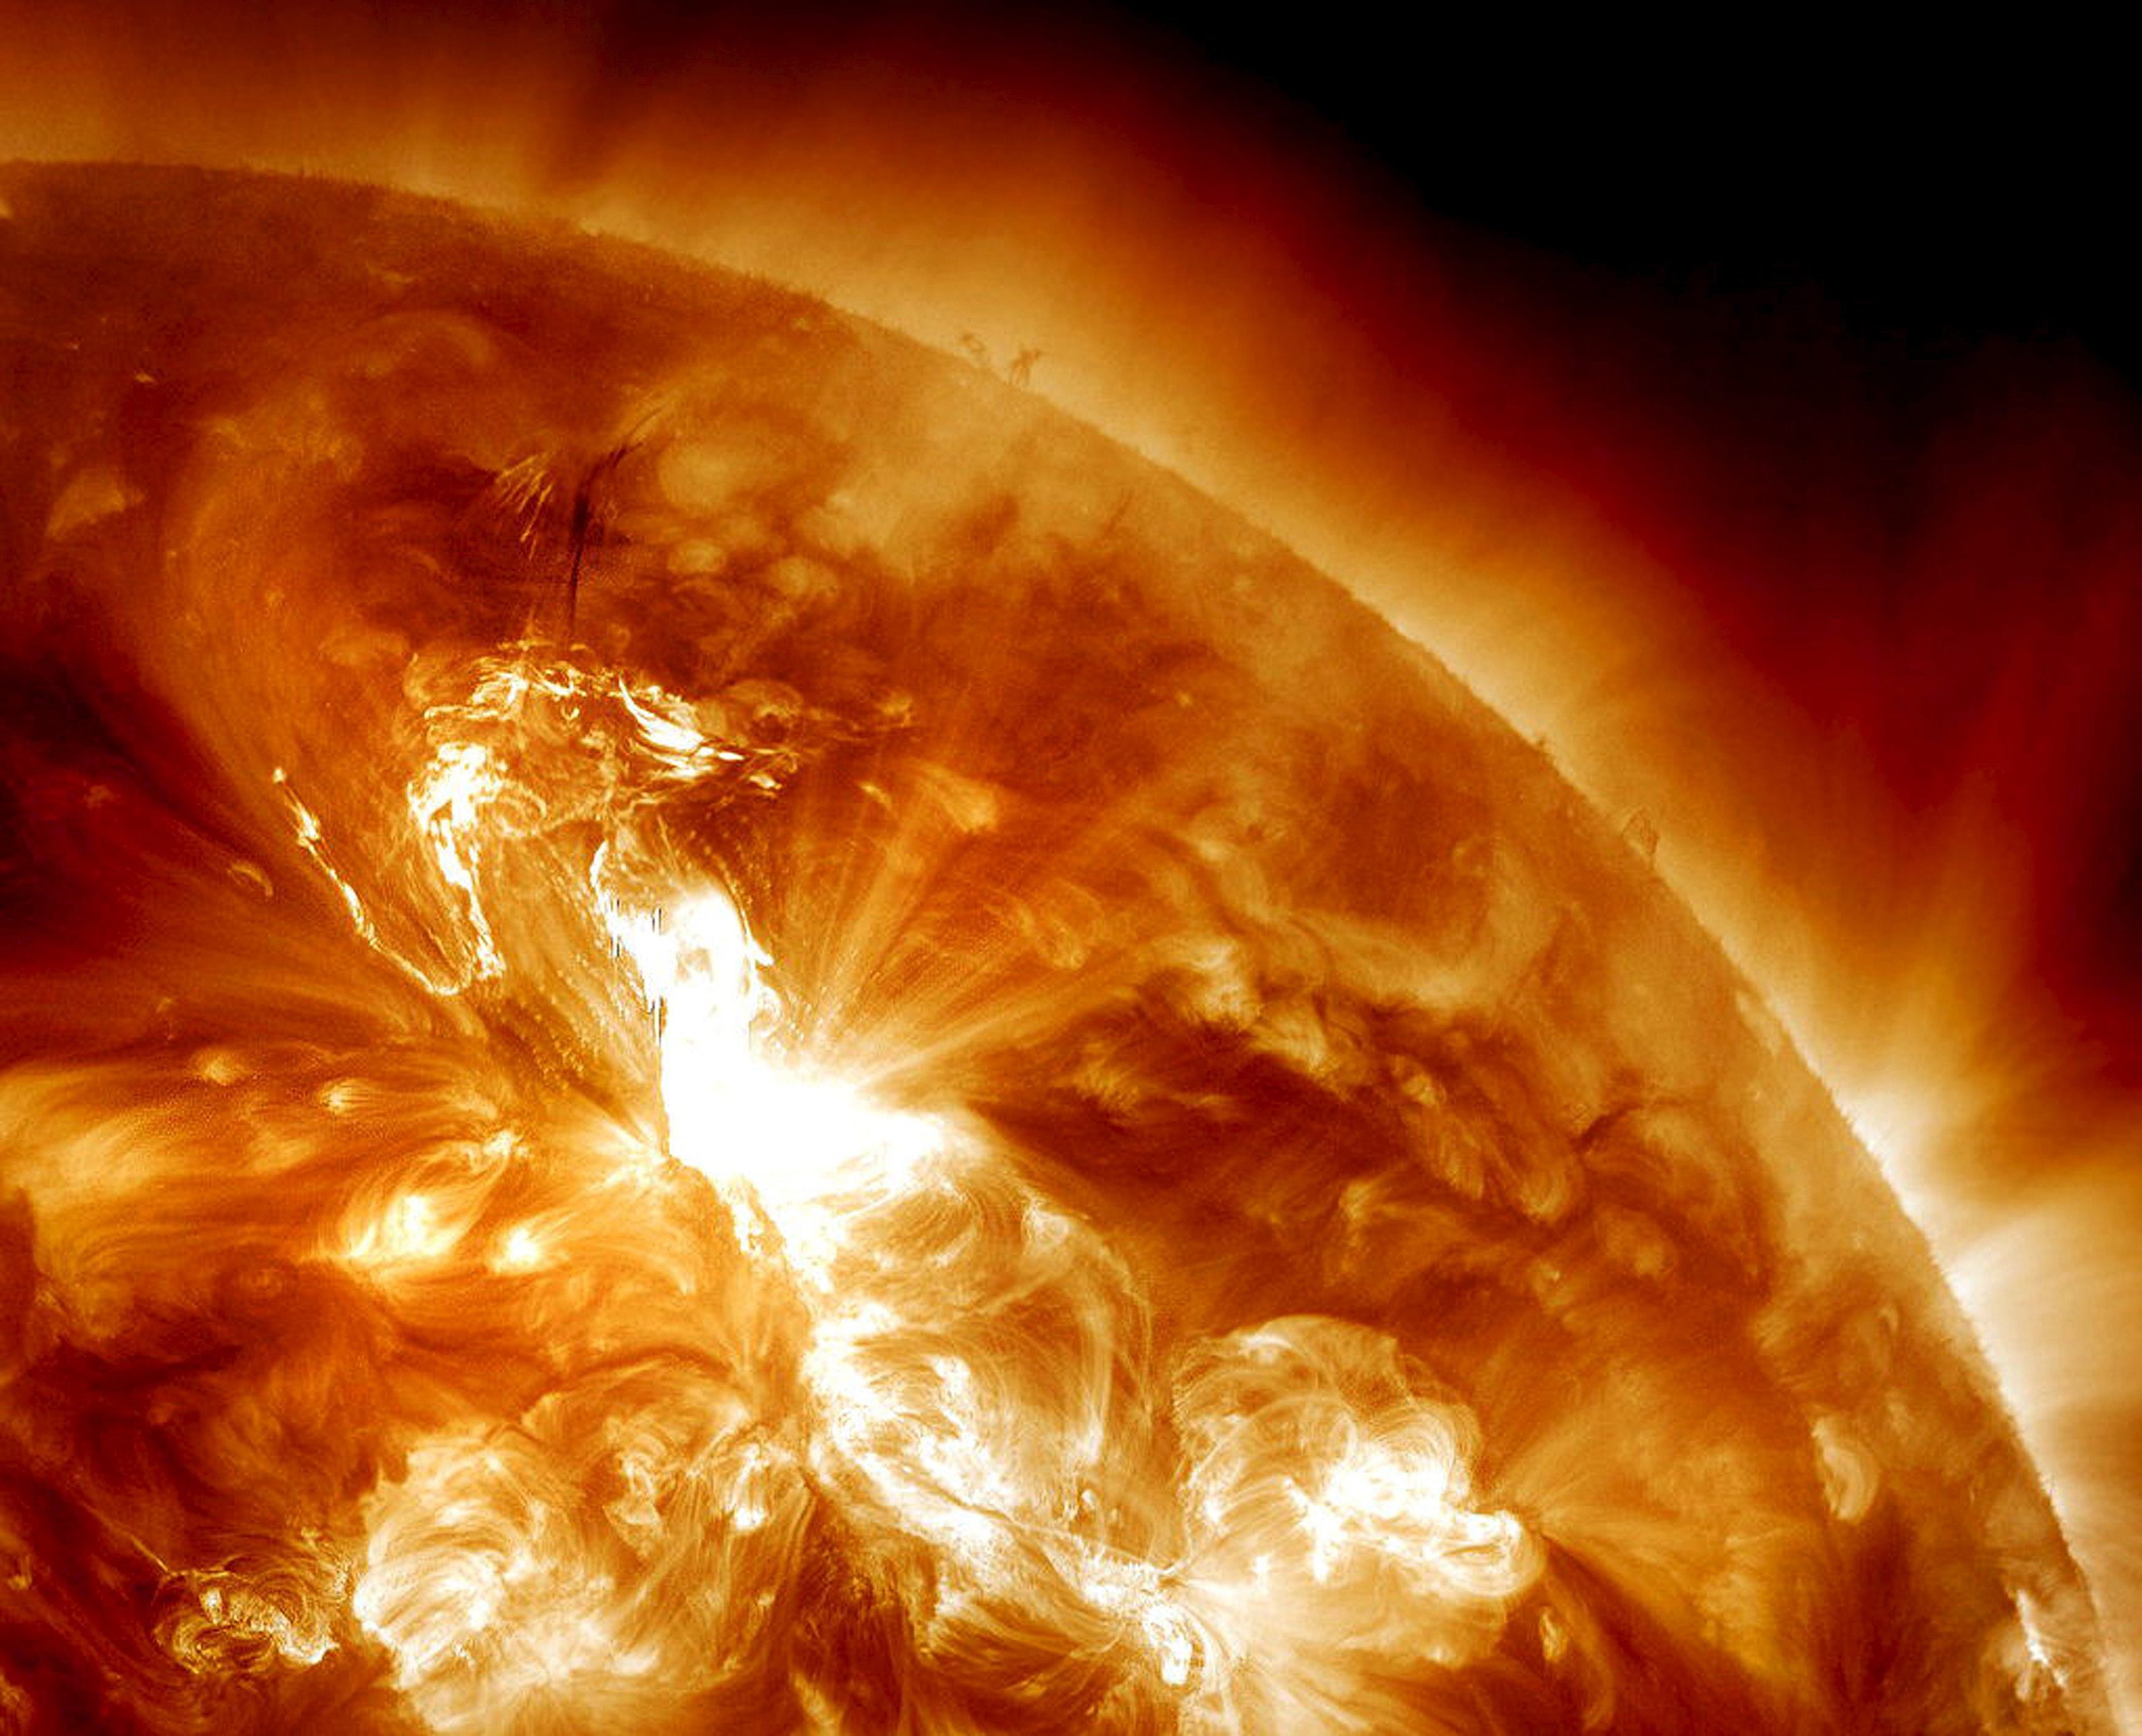 Tormenta solar captada por el observatorio SOHO.